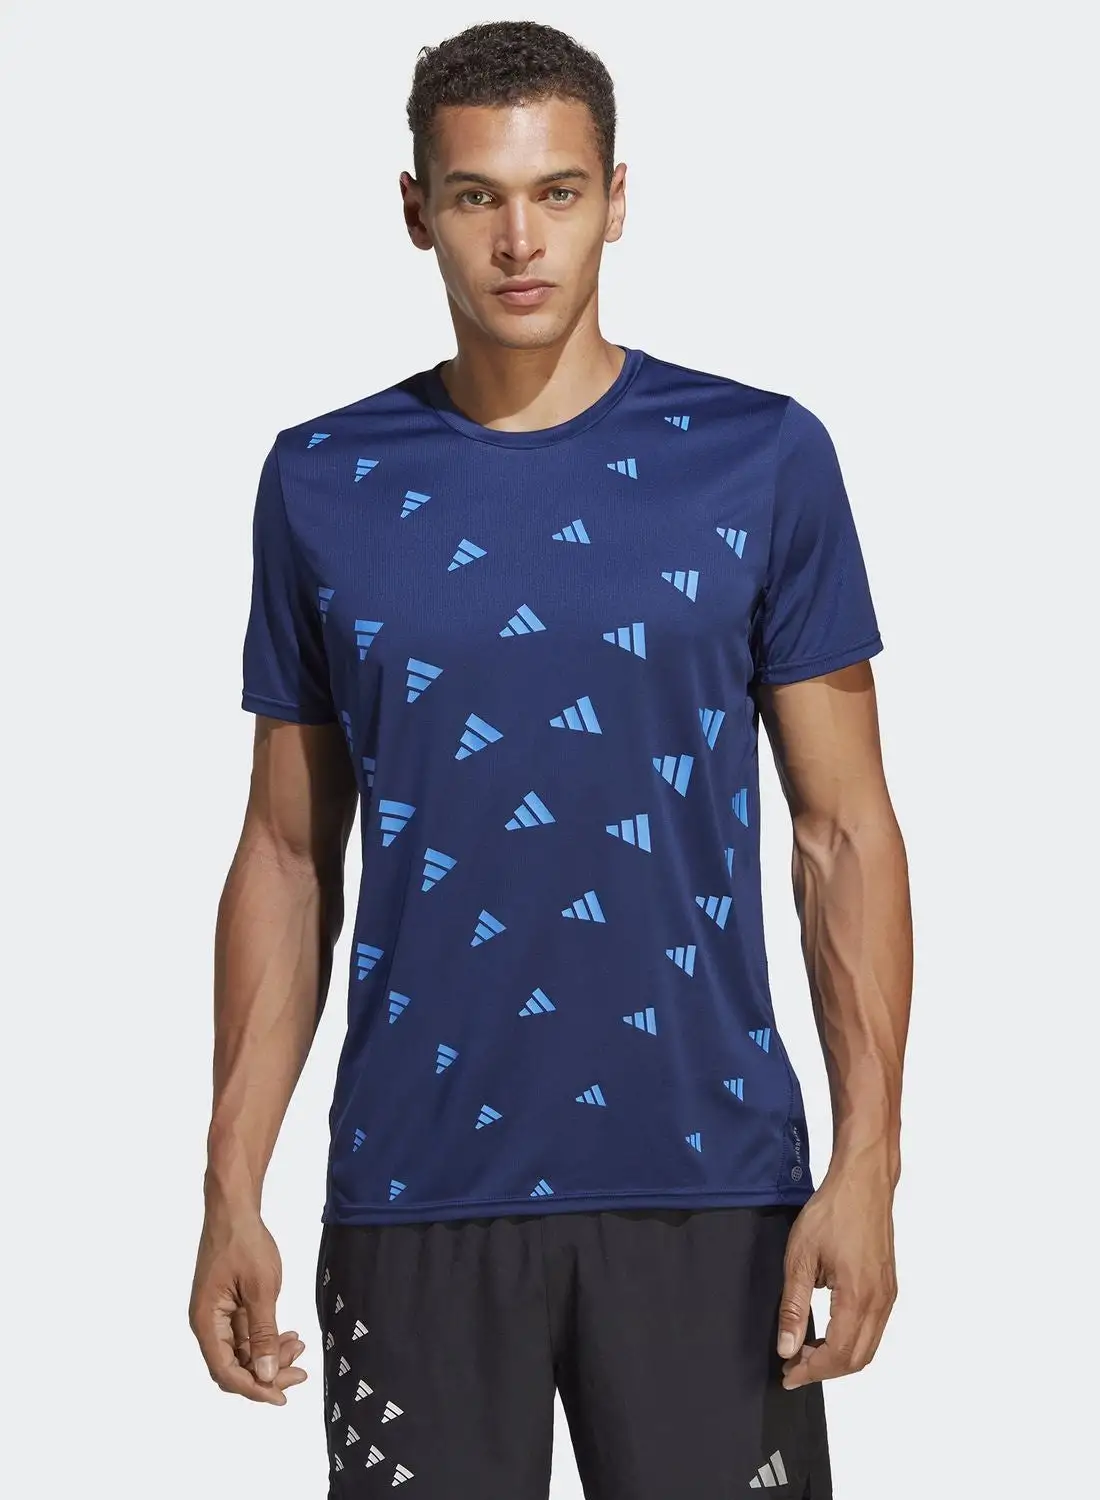 Adidas Brand Love Graphic T-Shirt